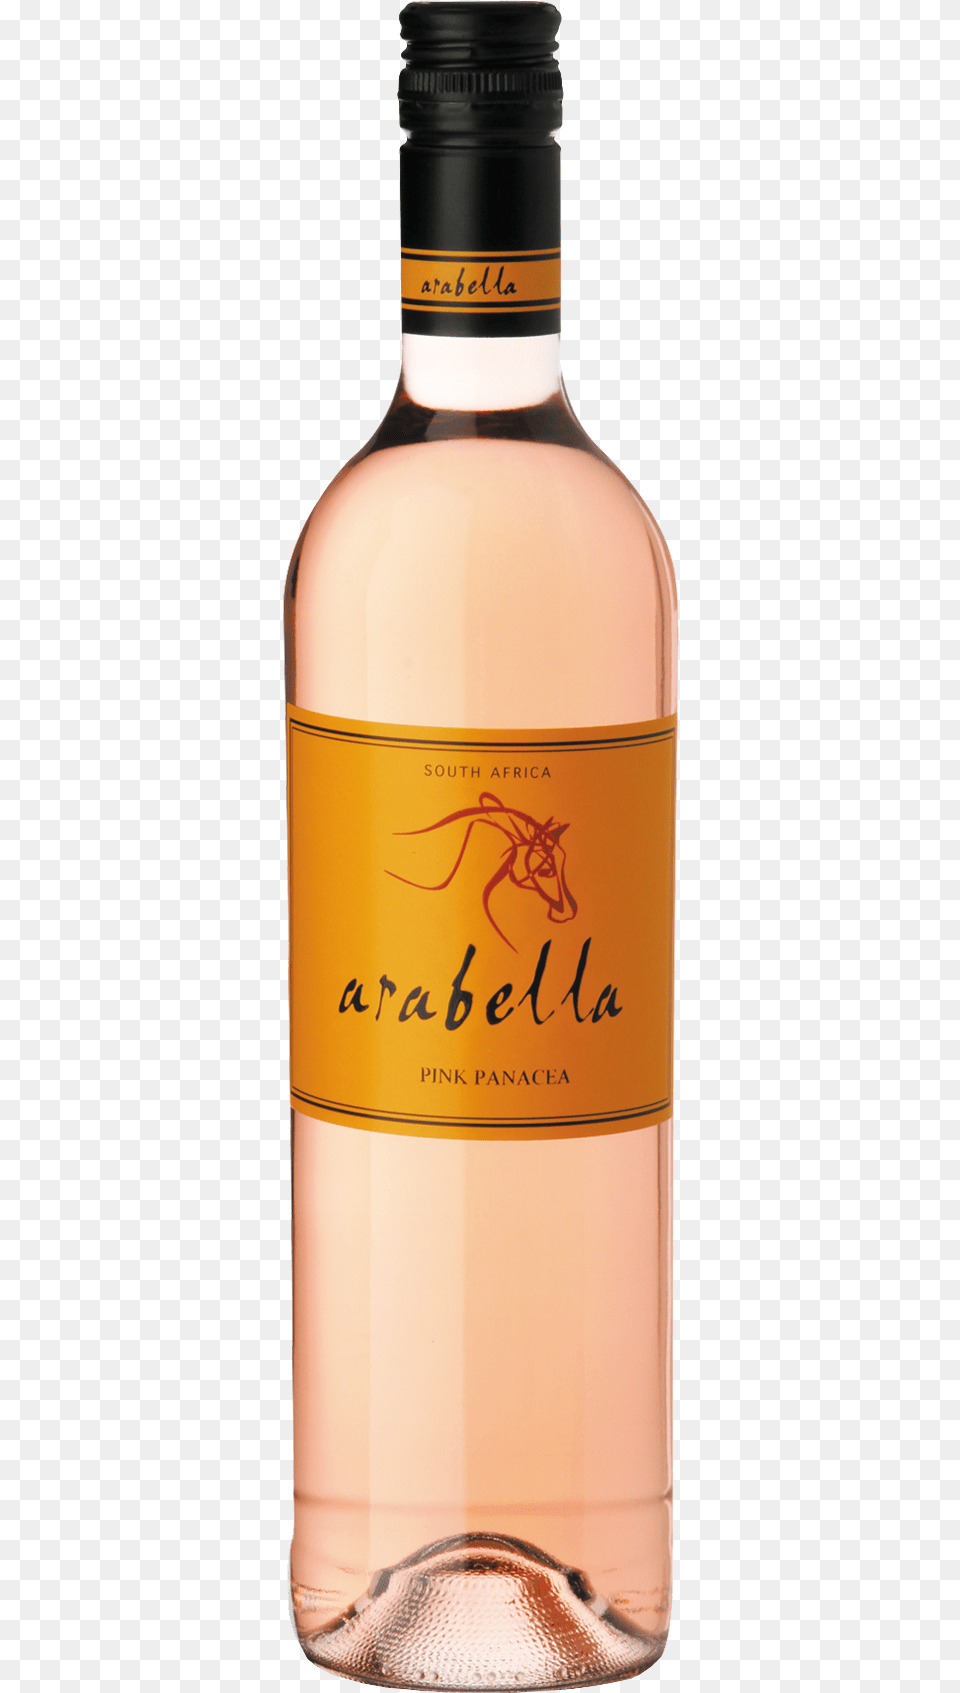 Arabella Pink Panacea 2019, Alcohol, Beverage, Liquor, Bottle Png Image